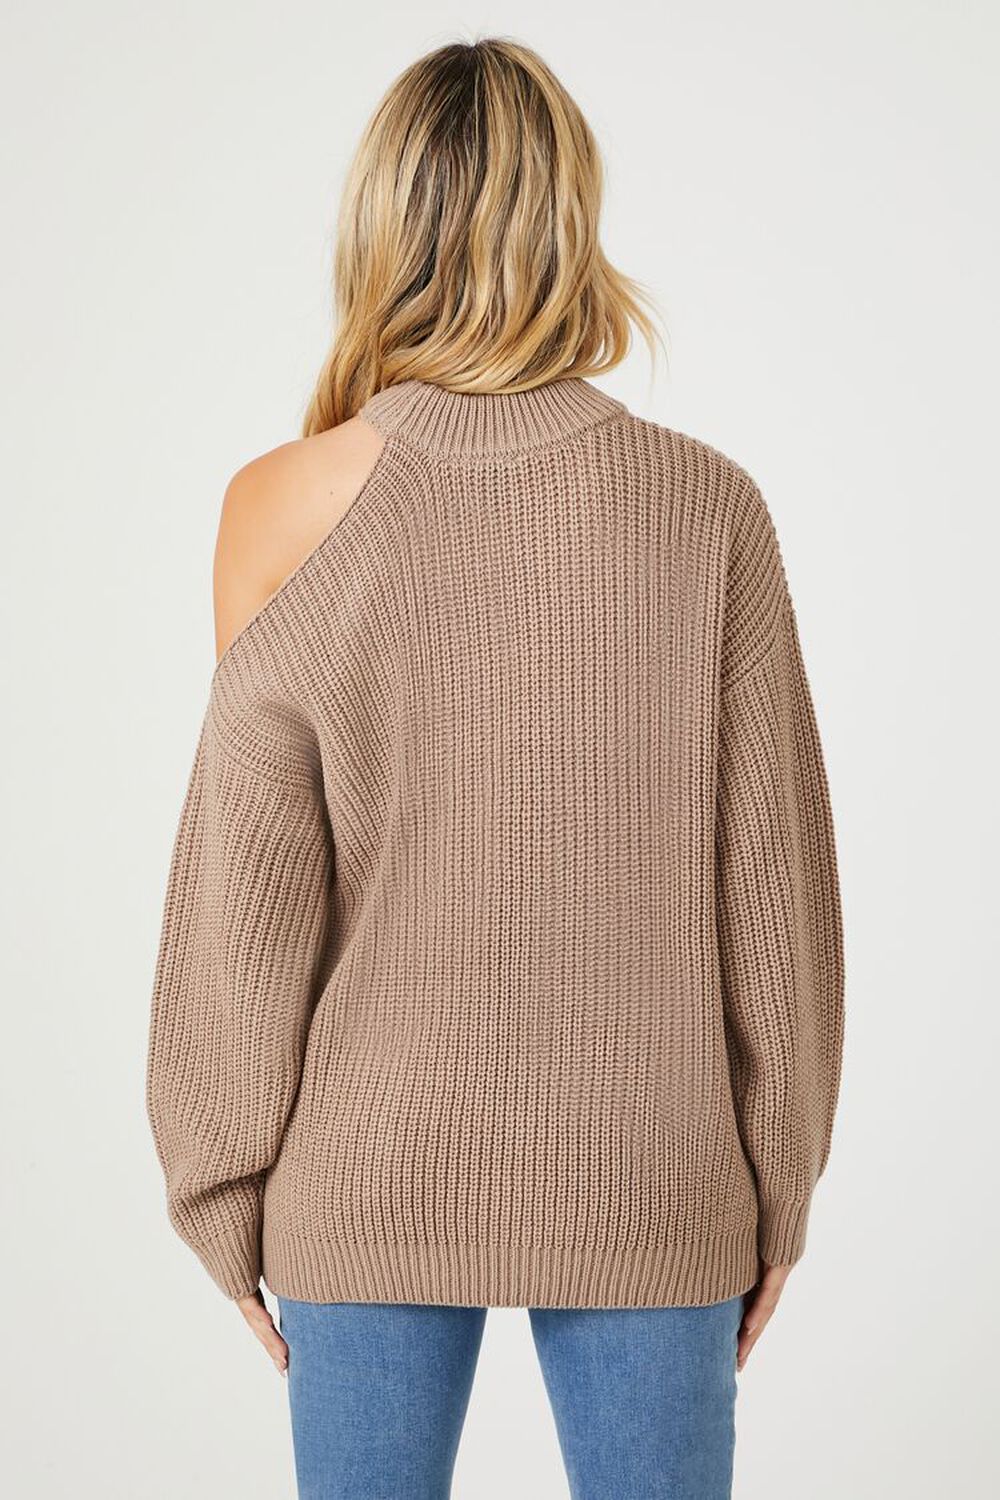 BROWN Asymmetrical Open-Shoulder Sweater, image 3